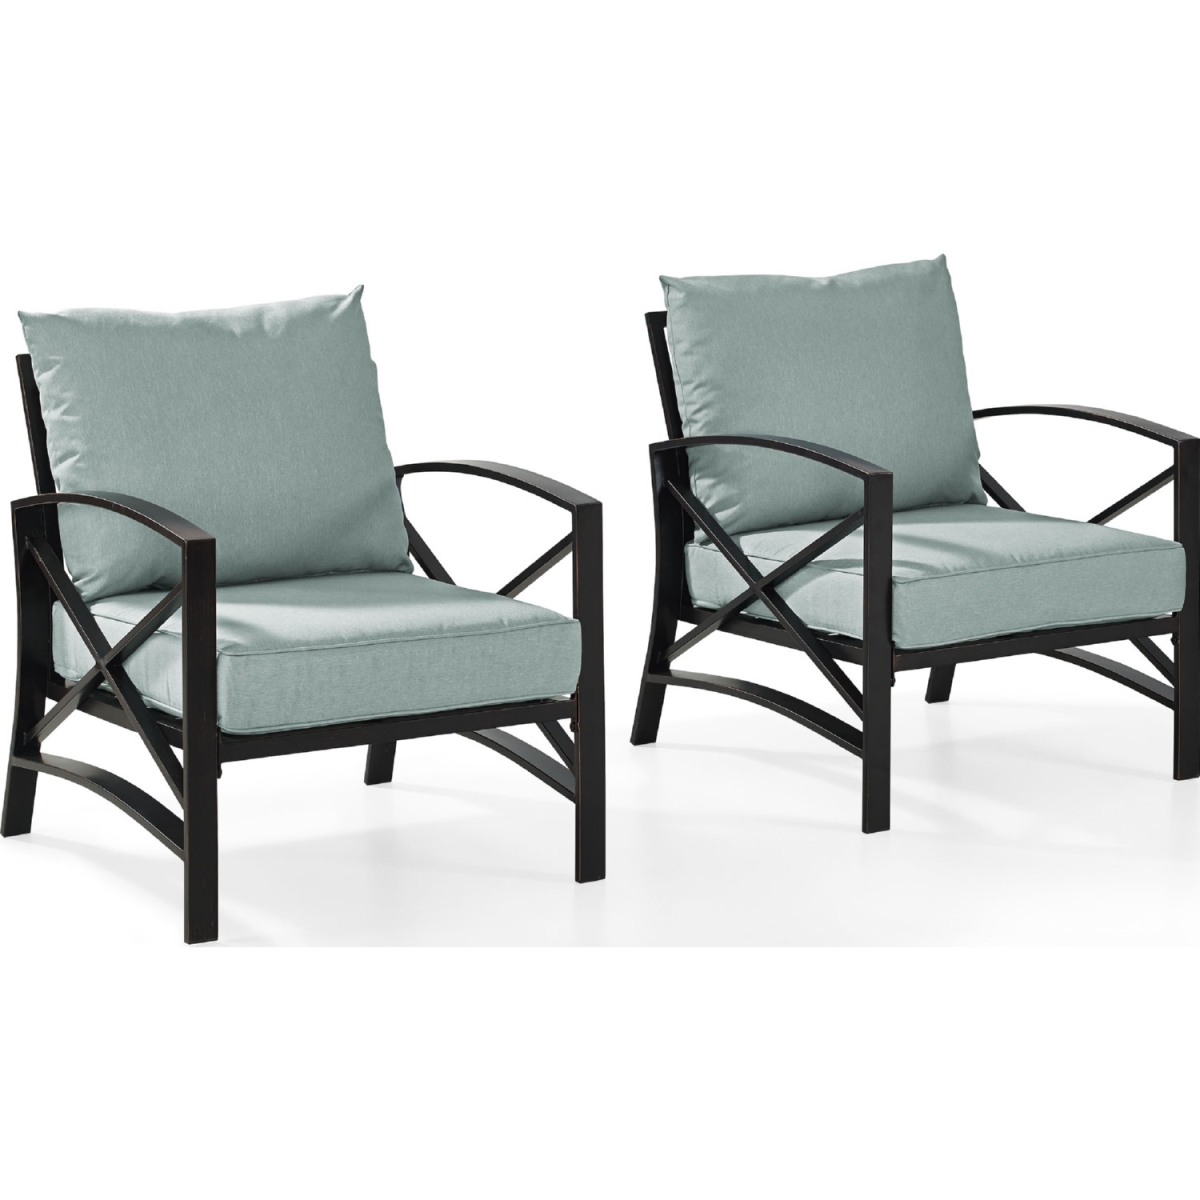 Ko60013bz-mi 2 Piece Kaplan Outdoor Seating Set With Mist Cushion - Two Kaplan Outdoor Chairs